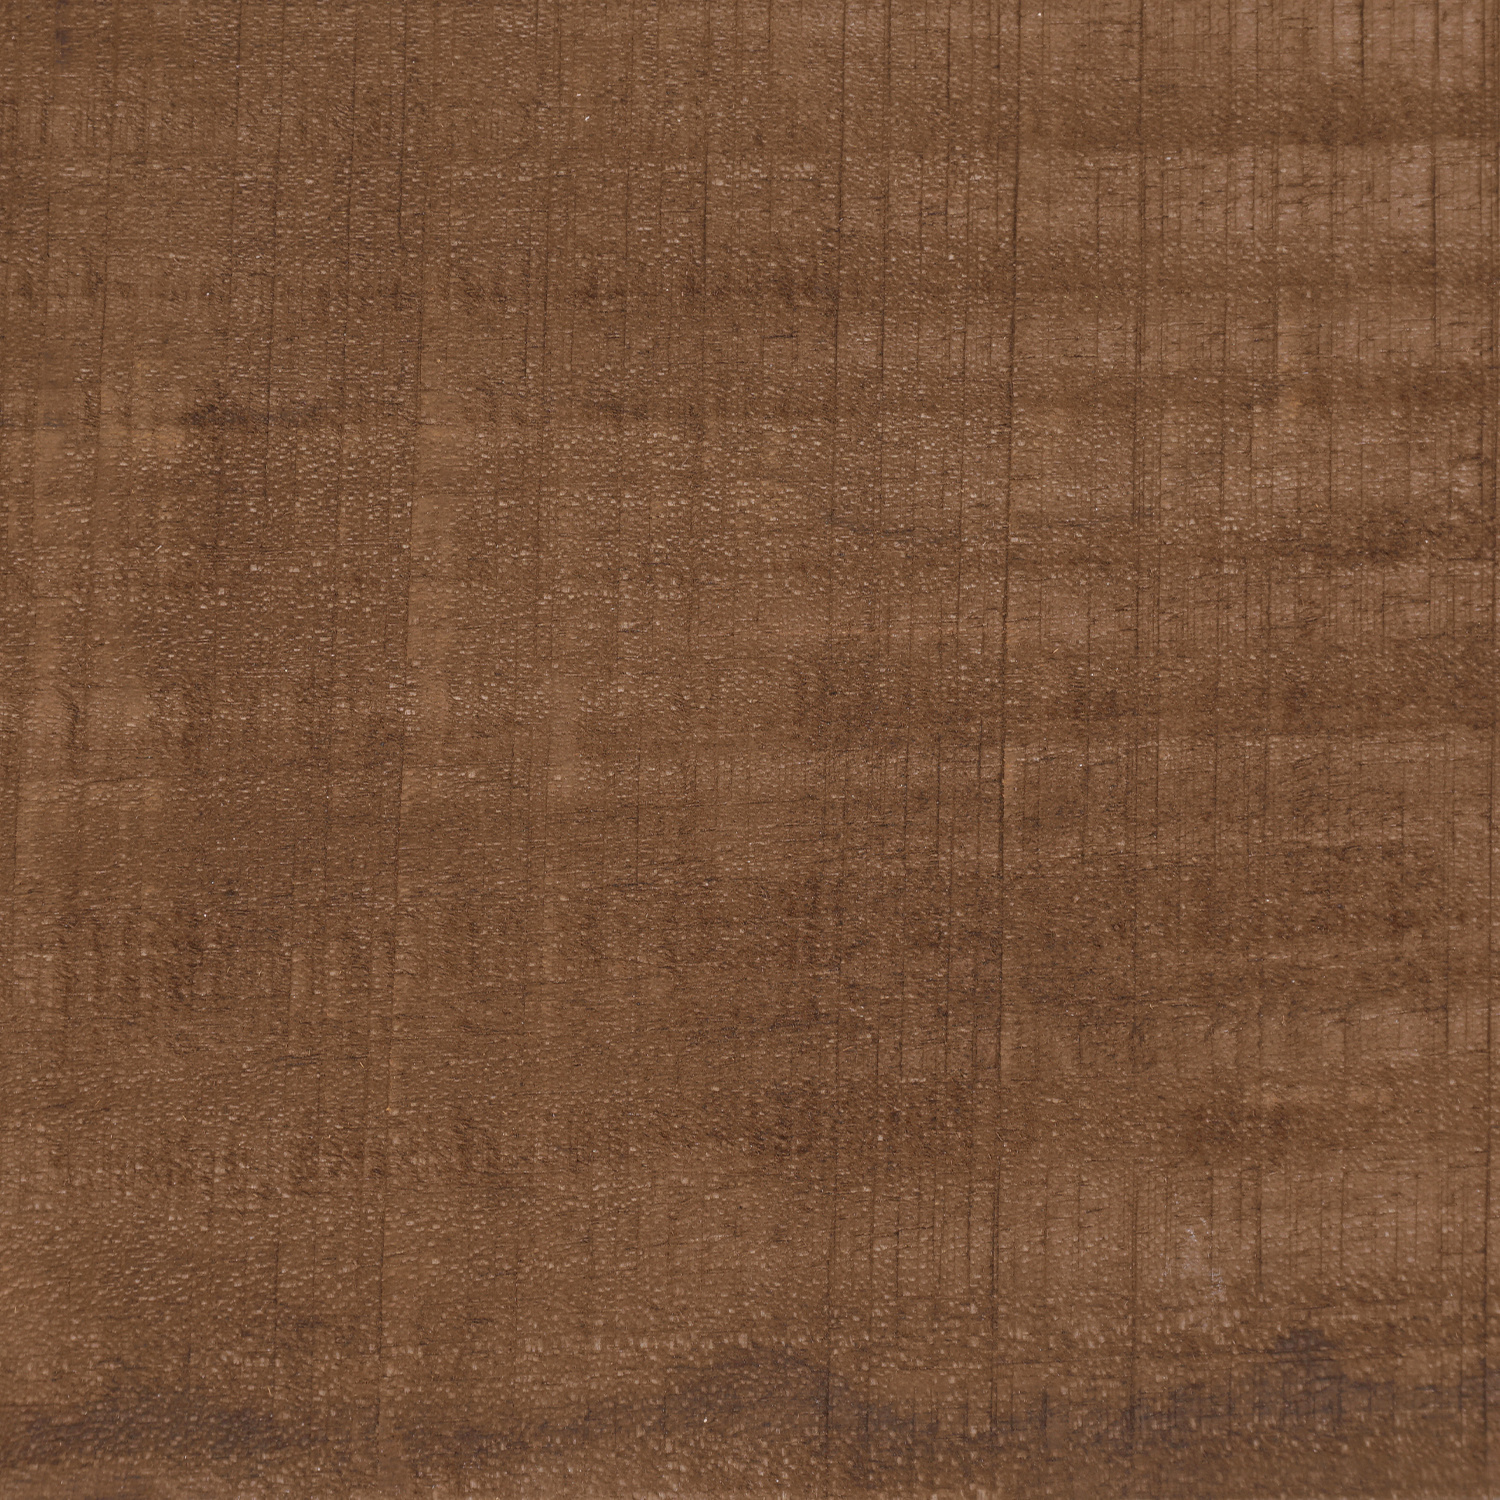  Thermowood Ayous balk 65x155 mm - fijnbezaagd (ruw) - kunstmatig gedroogd (kd 8-12%) - thermisch gemodificeerd Ayous hout (thermohout)